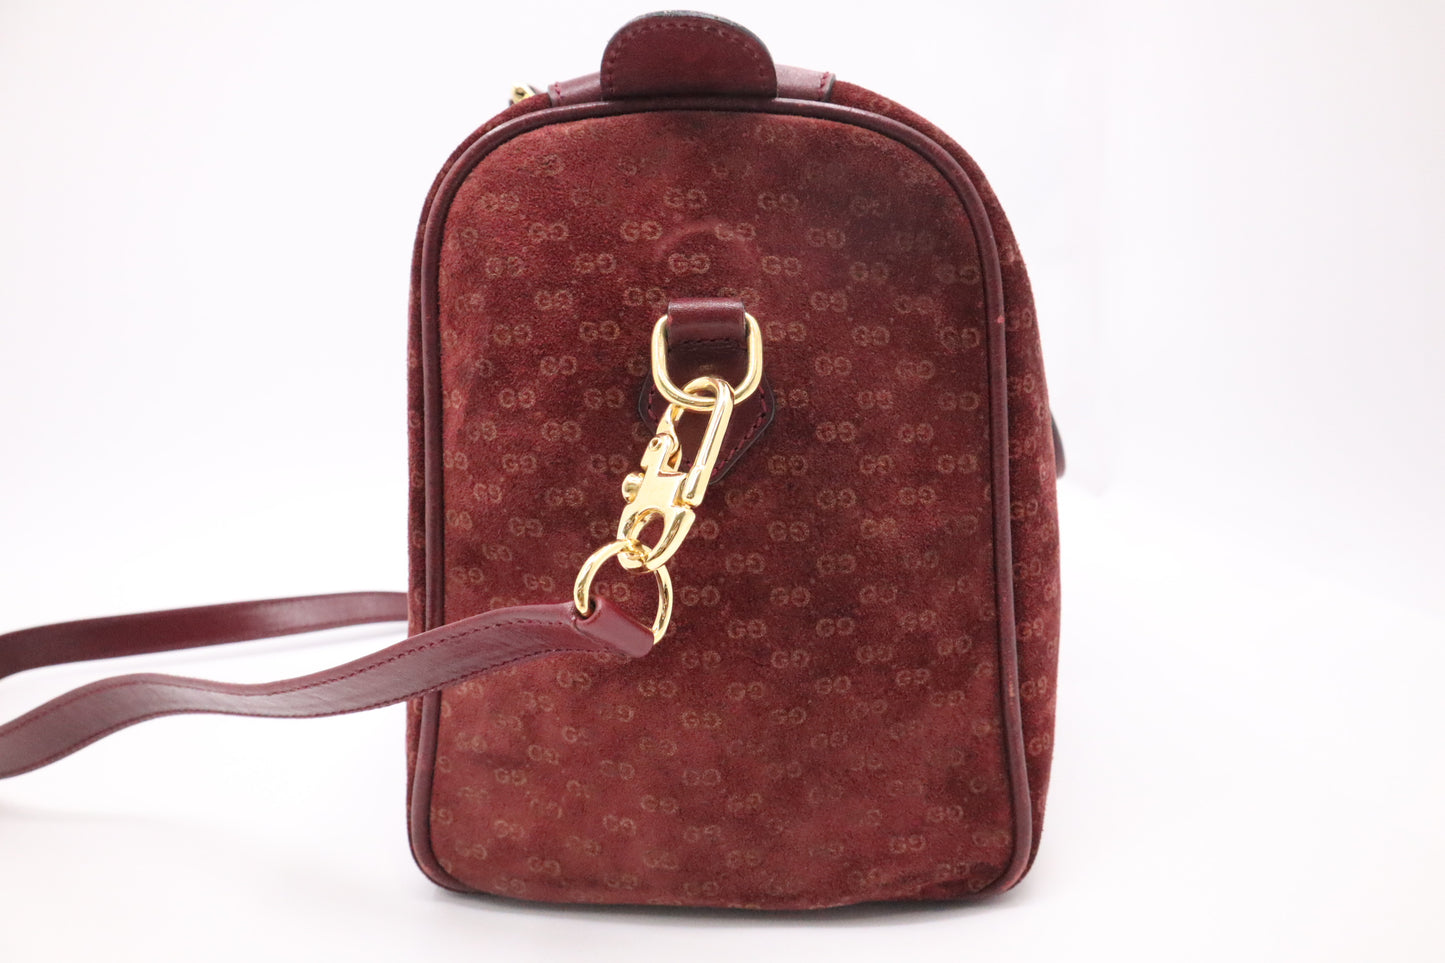 Gucci Boston Bag in Burgundy GG Suede